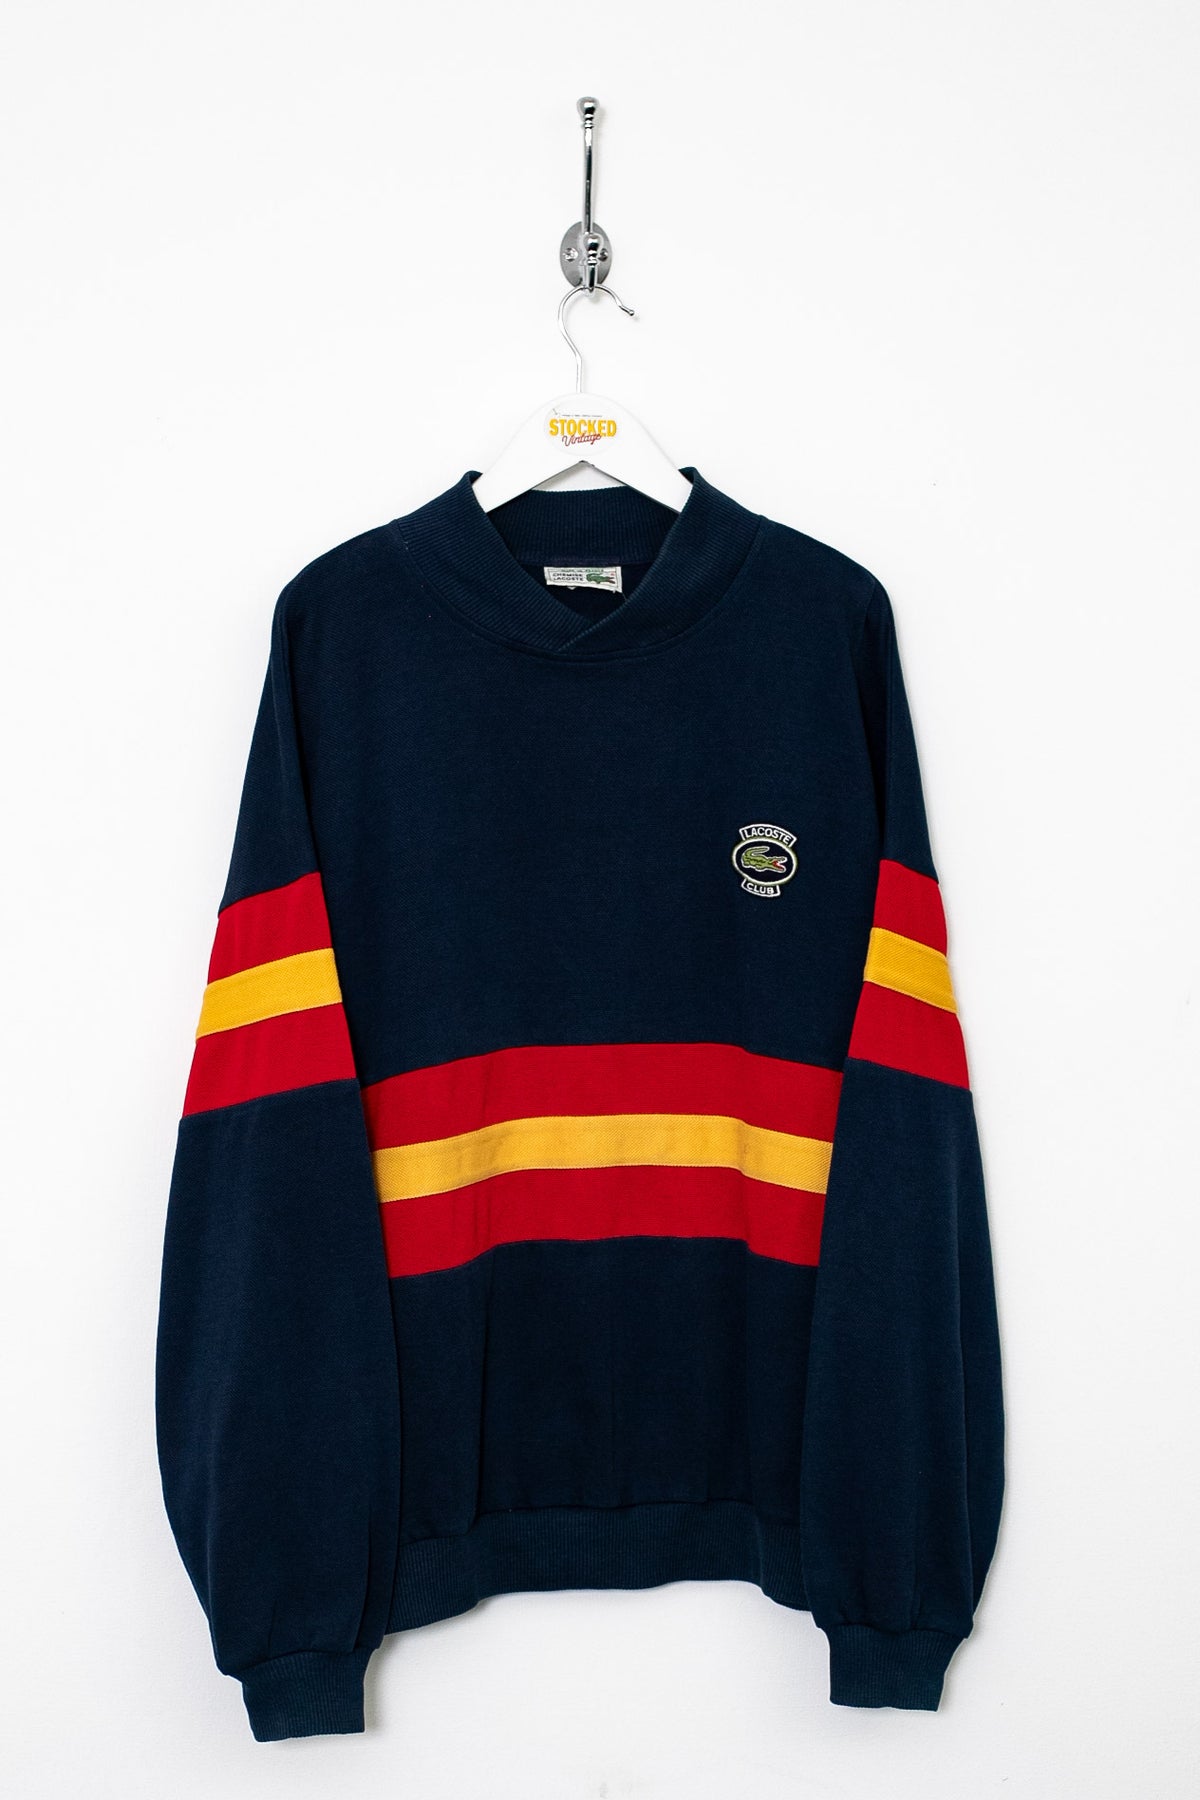 90s Lacoste Sweatshirt (M)